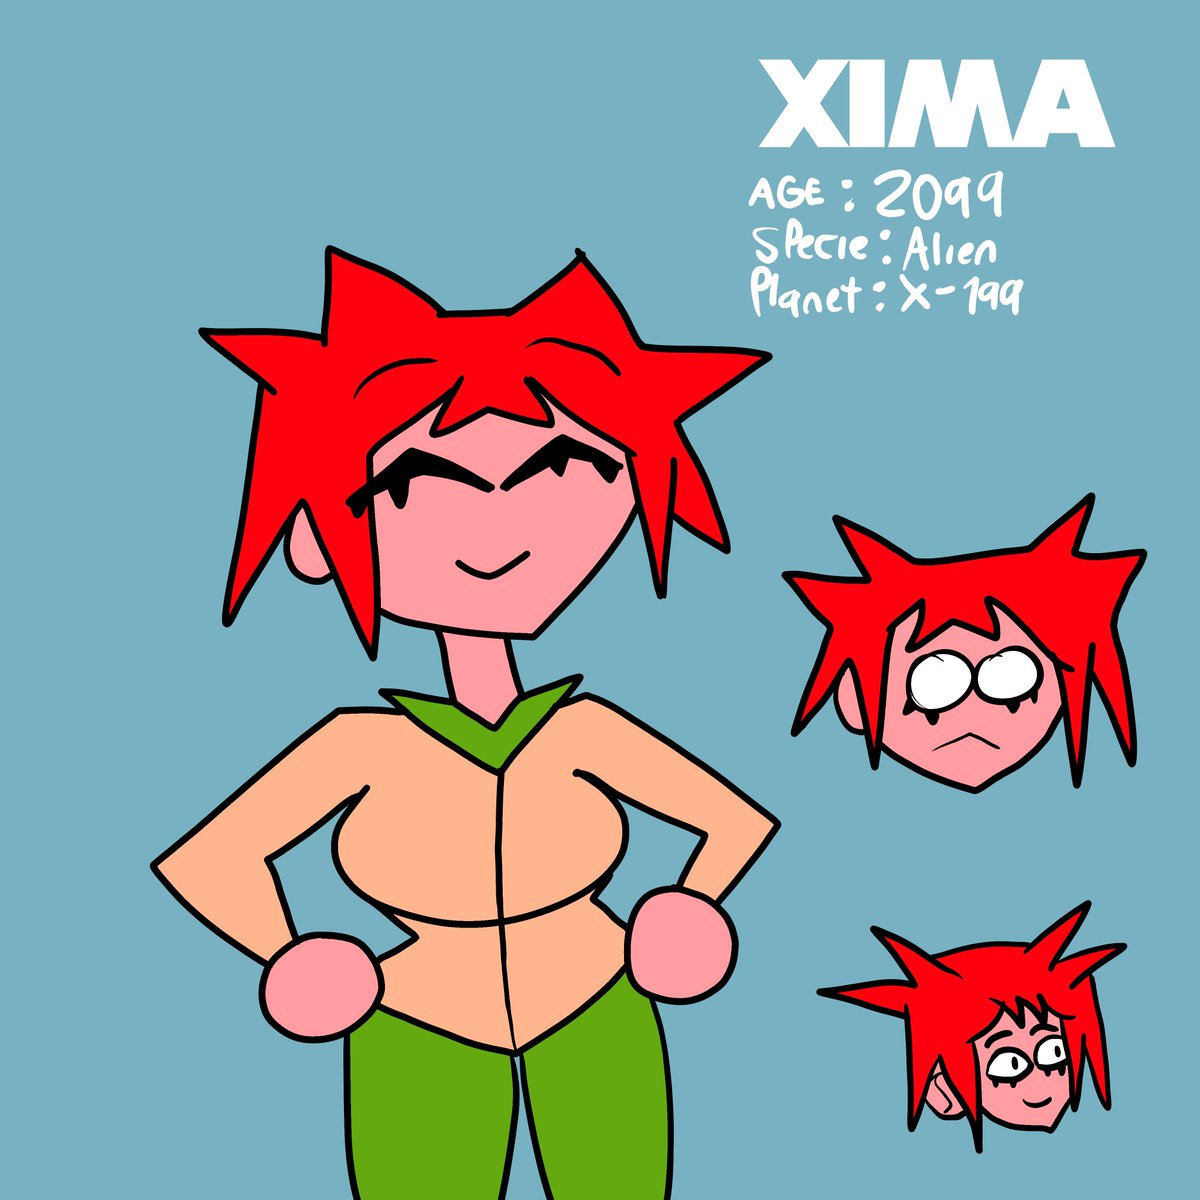 Xima the Alien
.
.
.
#OC #originalcharacter #Aliengirl #FemaleOC #ocart